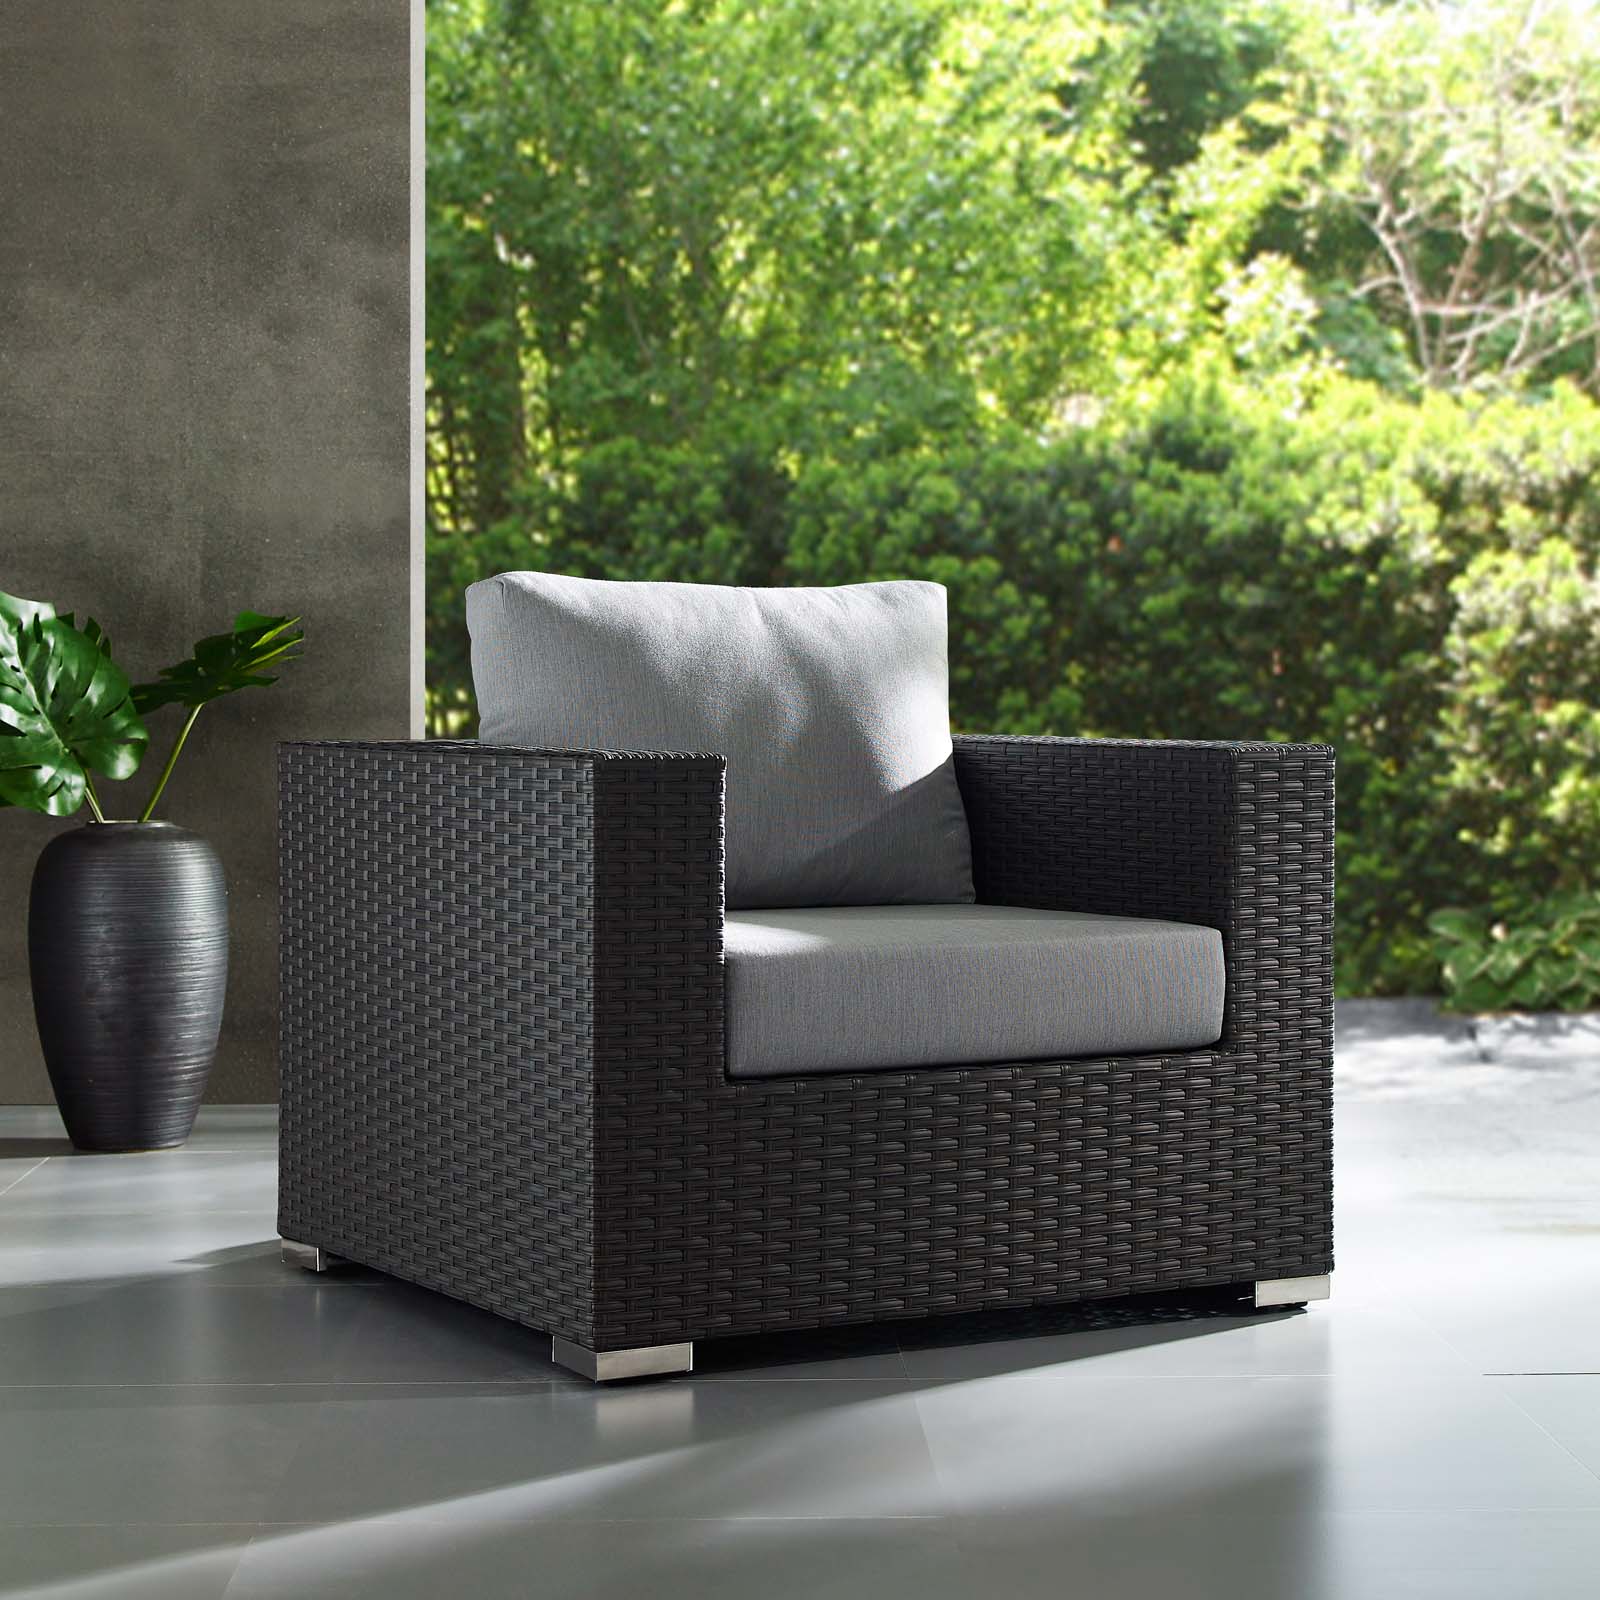 Modern Contemporary Urban Design Outdoor Patio Balcony Garden Furniture Lounge Chair Armchair, Sunbrella Rattan Wicker, Grey Gray - image 2 of 4